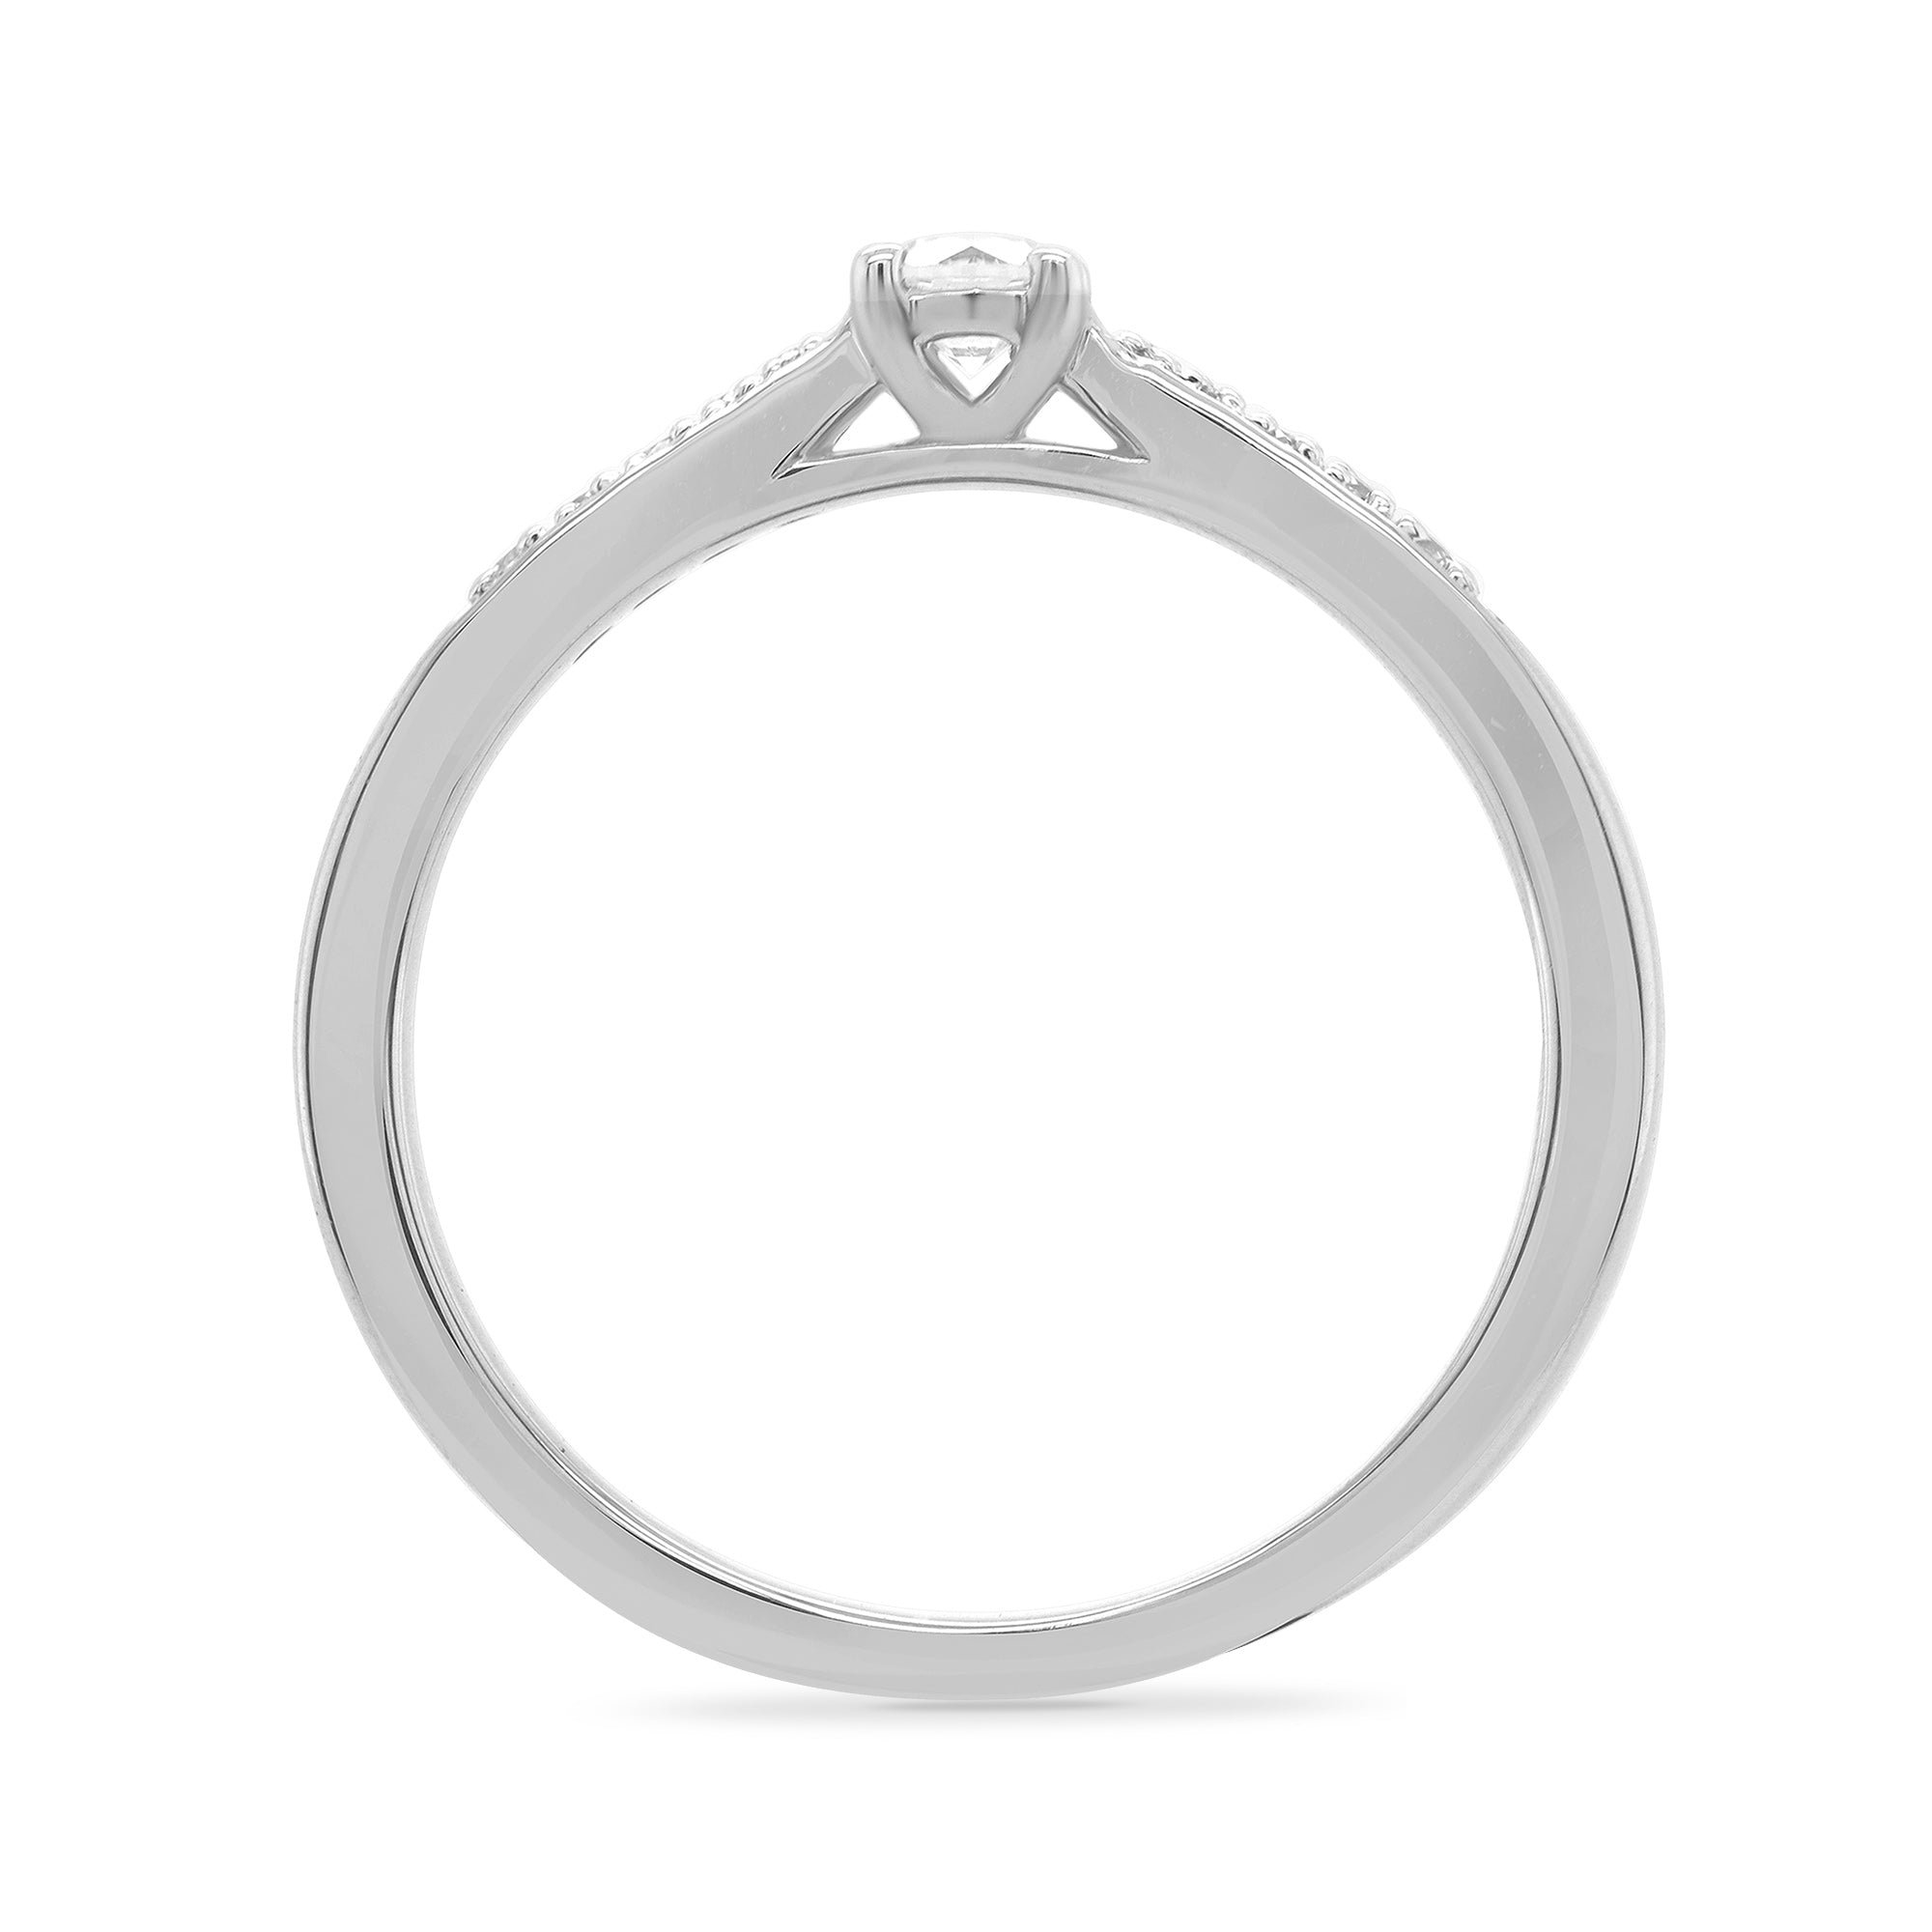 9ct white gold single stone diamond ring with diamond set shoulders 0.21ct